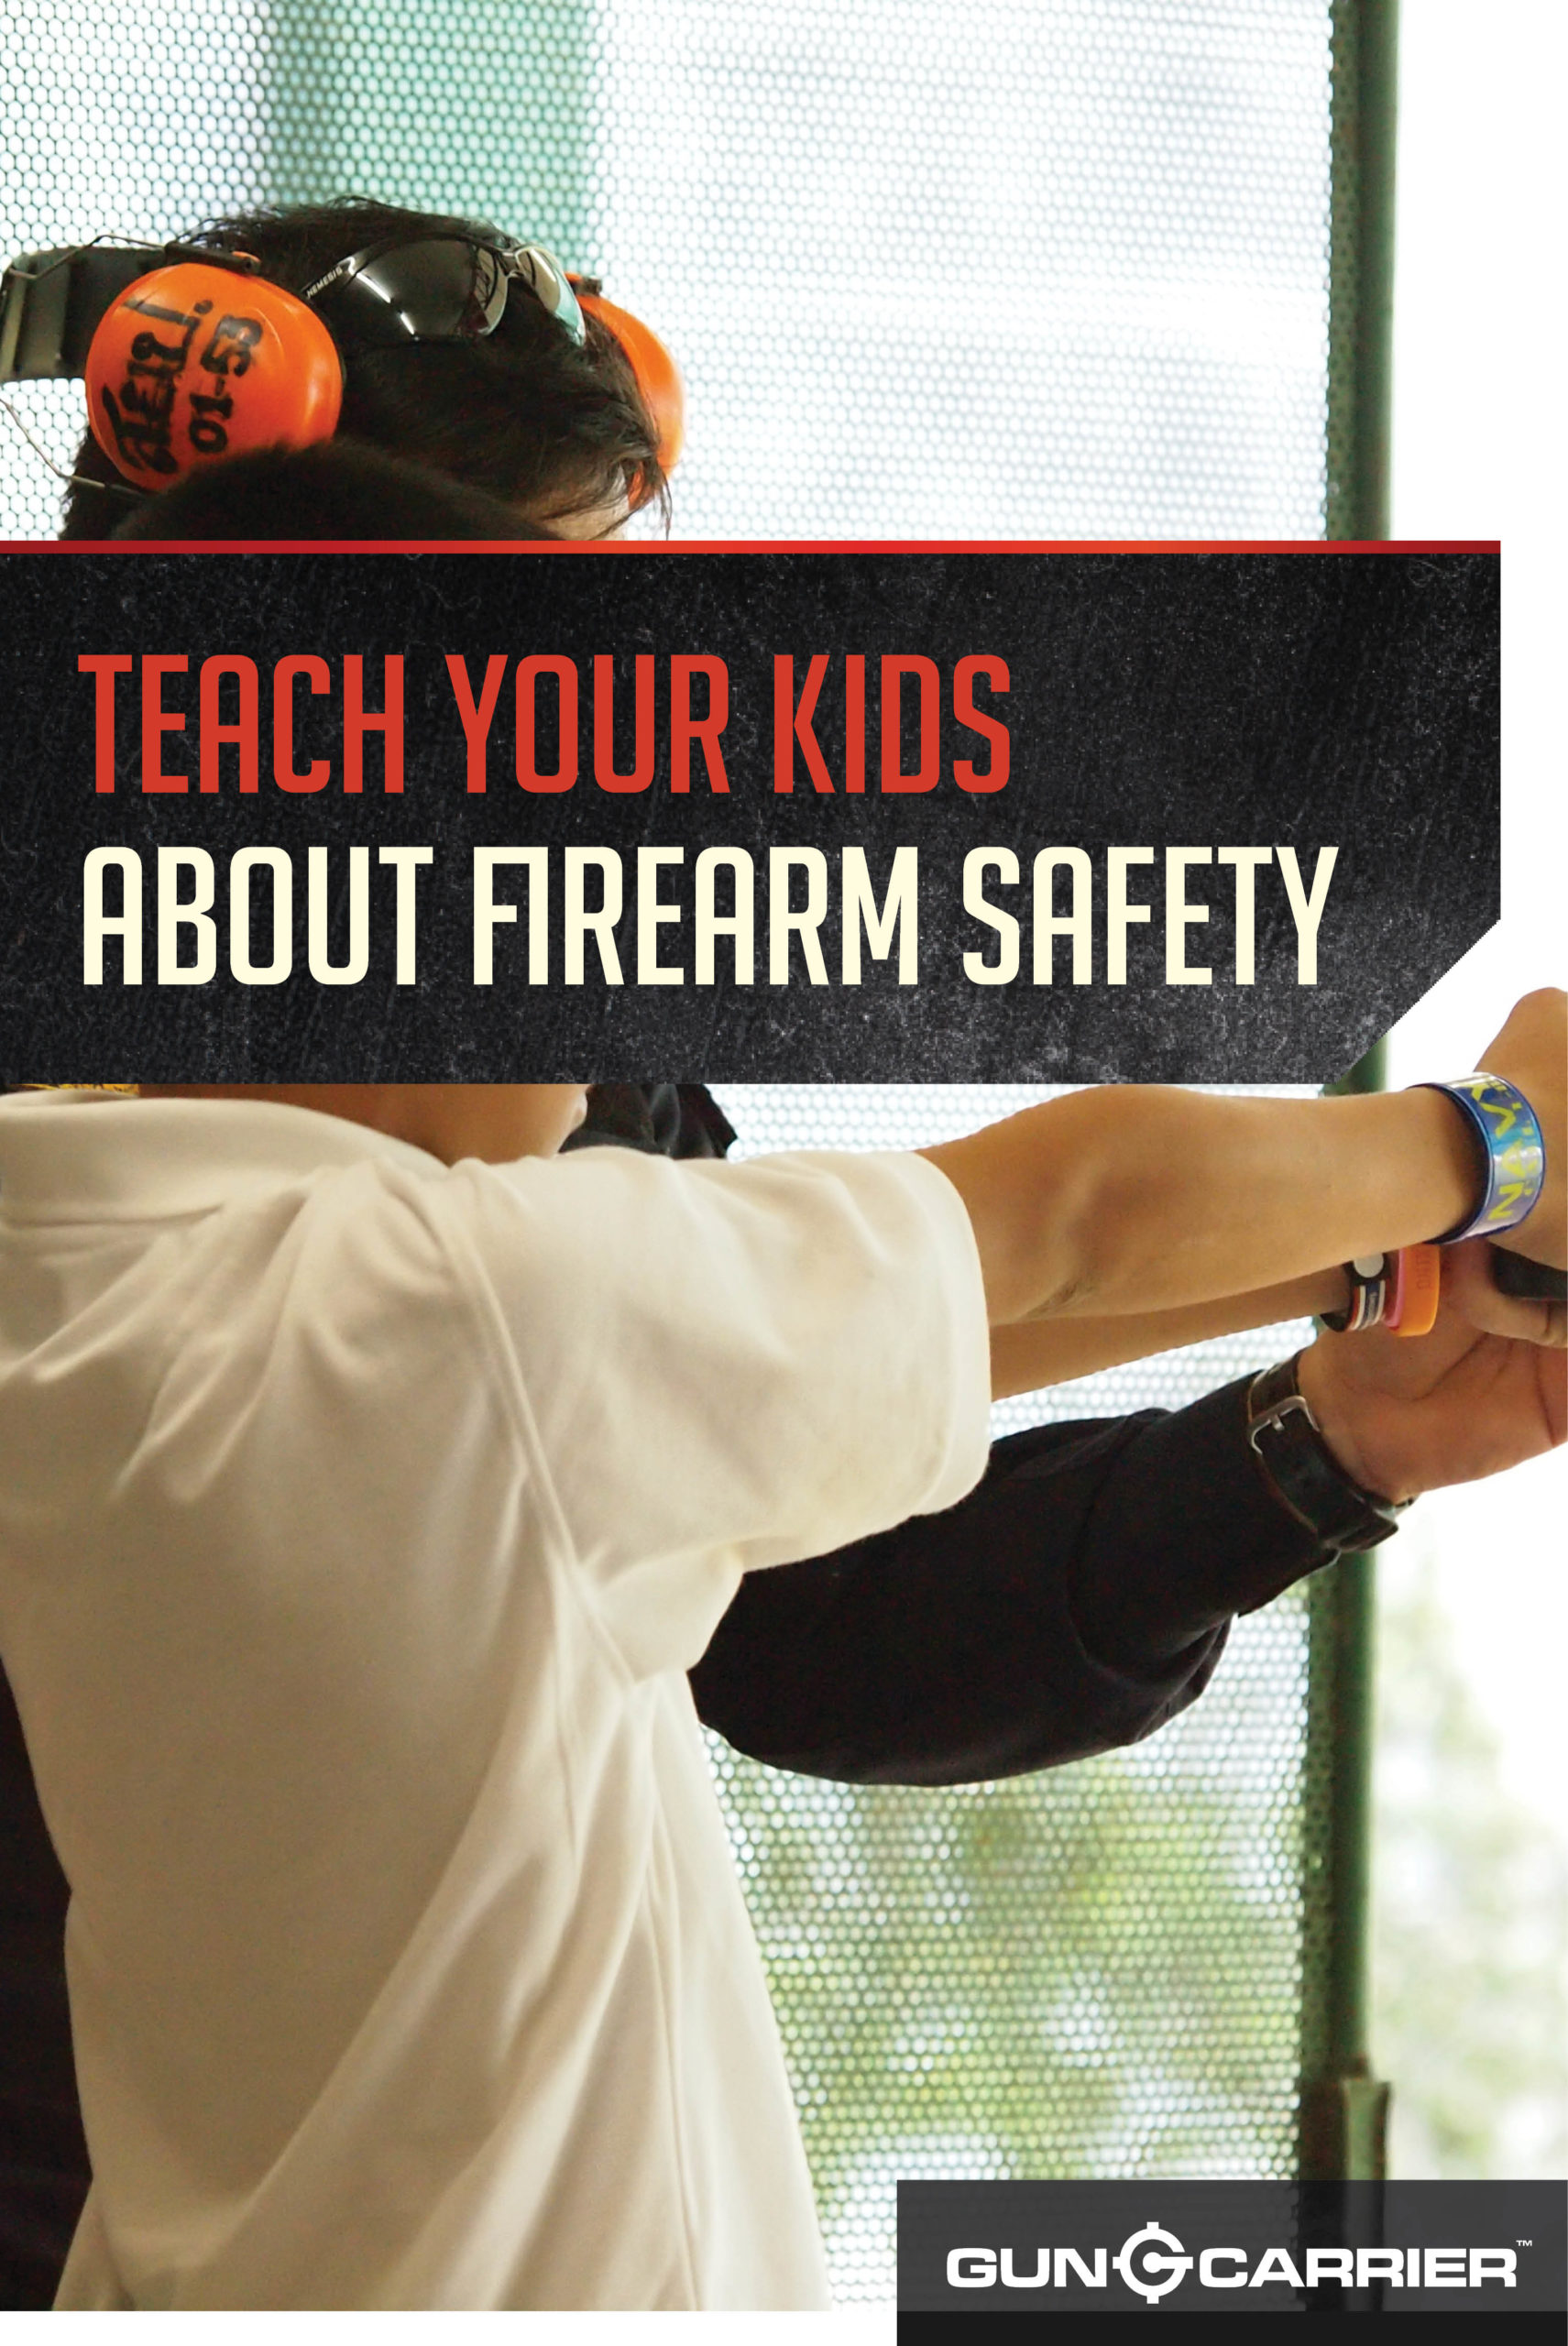 Educating Kids on Gun Safety by Gun Carrier at https://guncarrier.com/gun-safety-for-kids